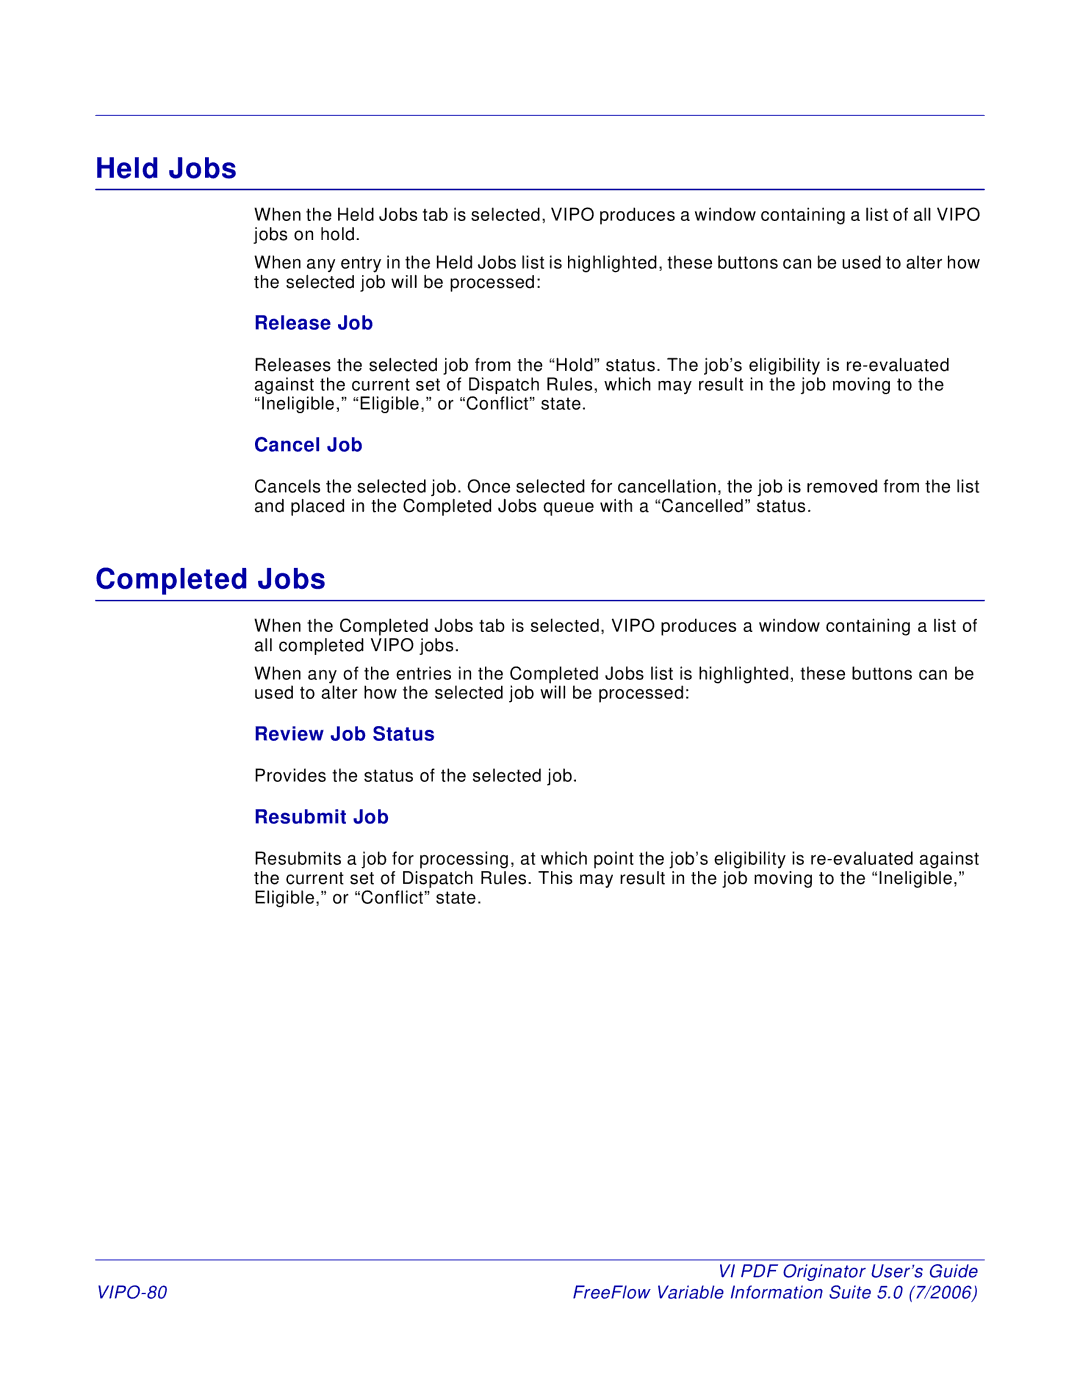 Xerox 5 manual Held Jobs, Completed Jobs, Release Job, Review Job Status, Resubmit Job 